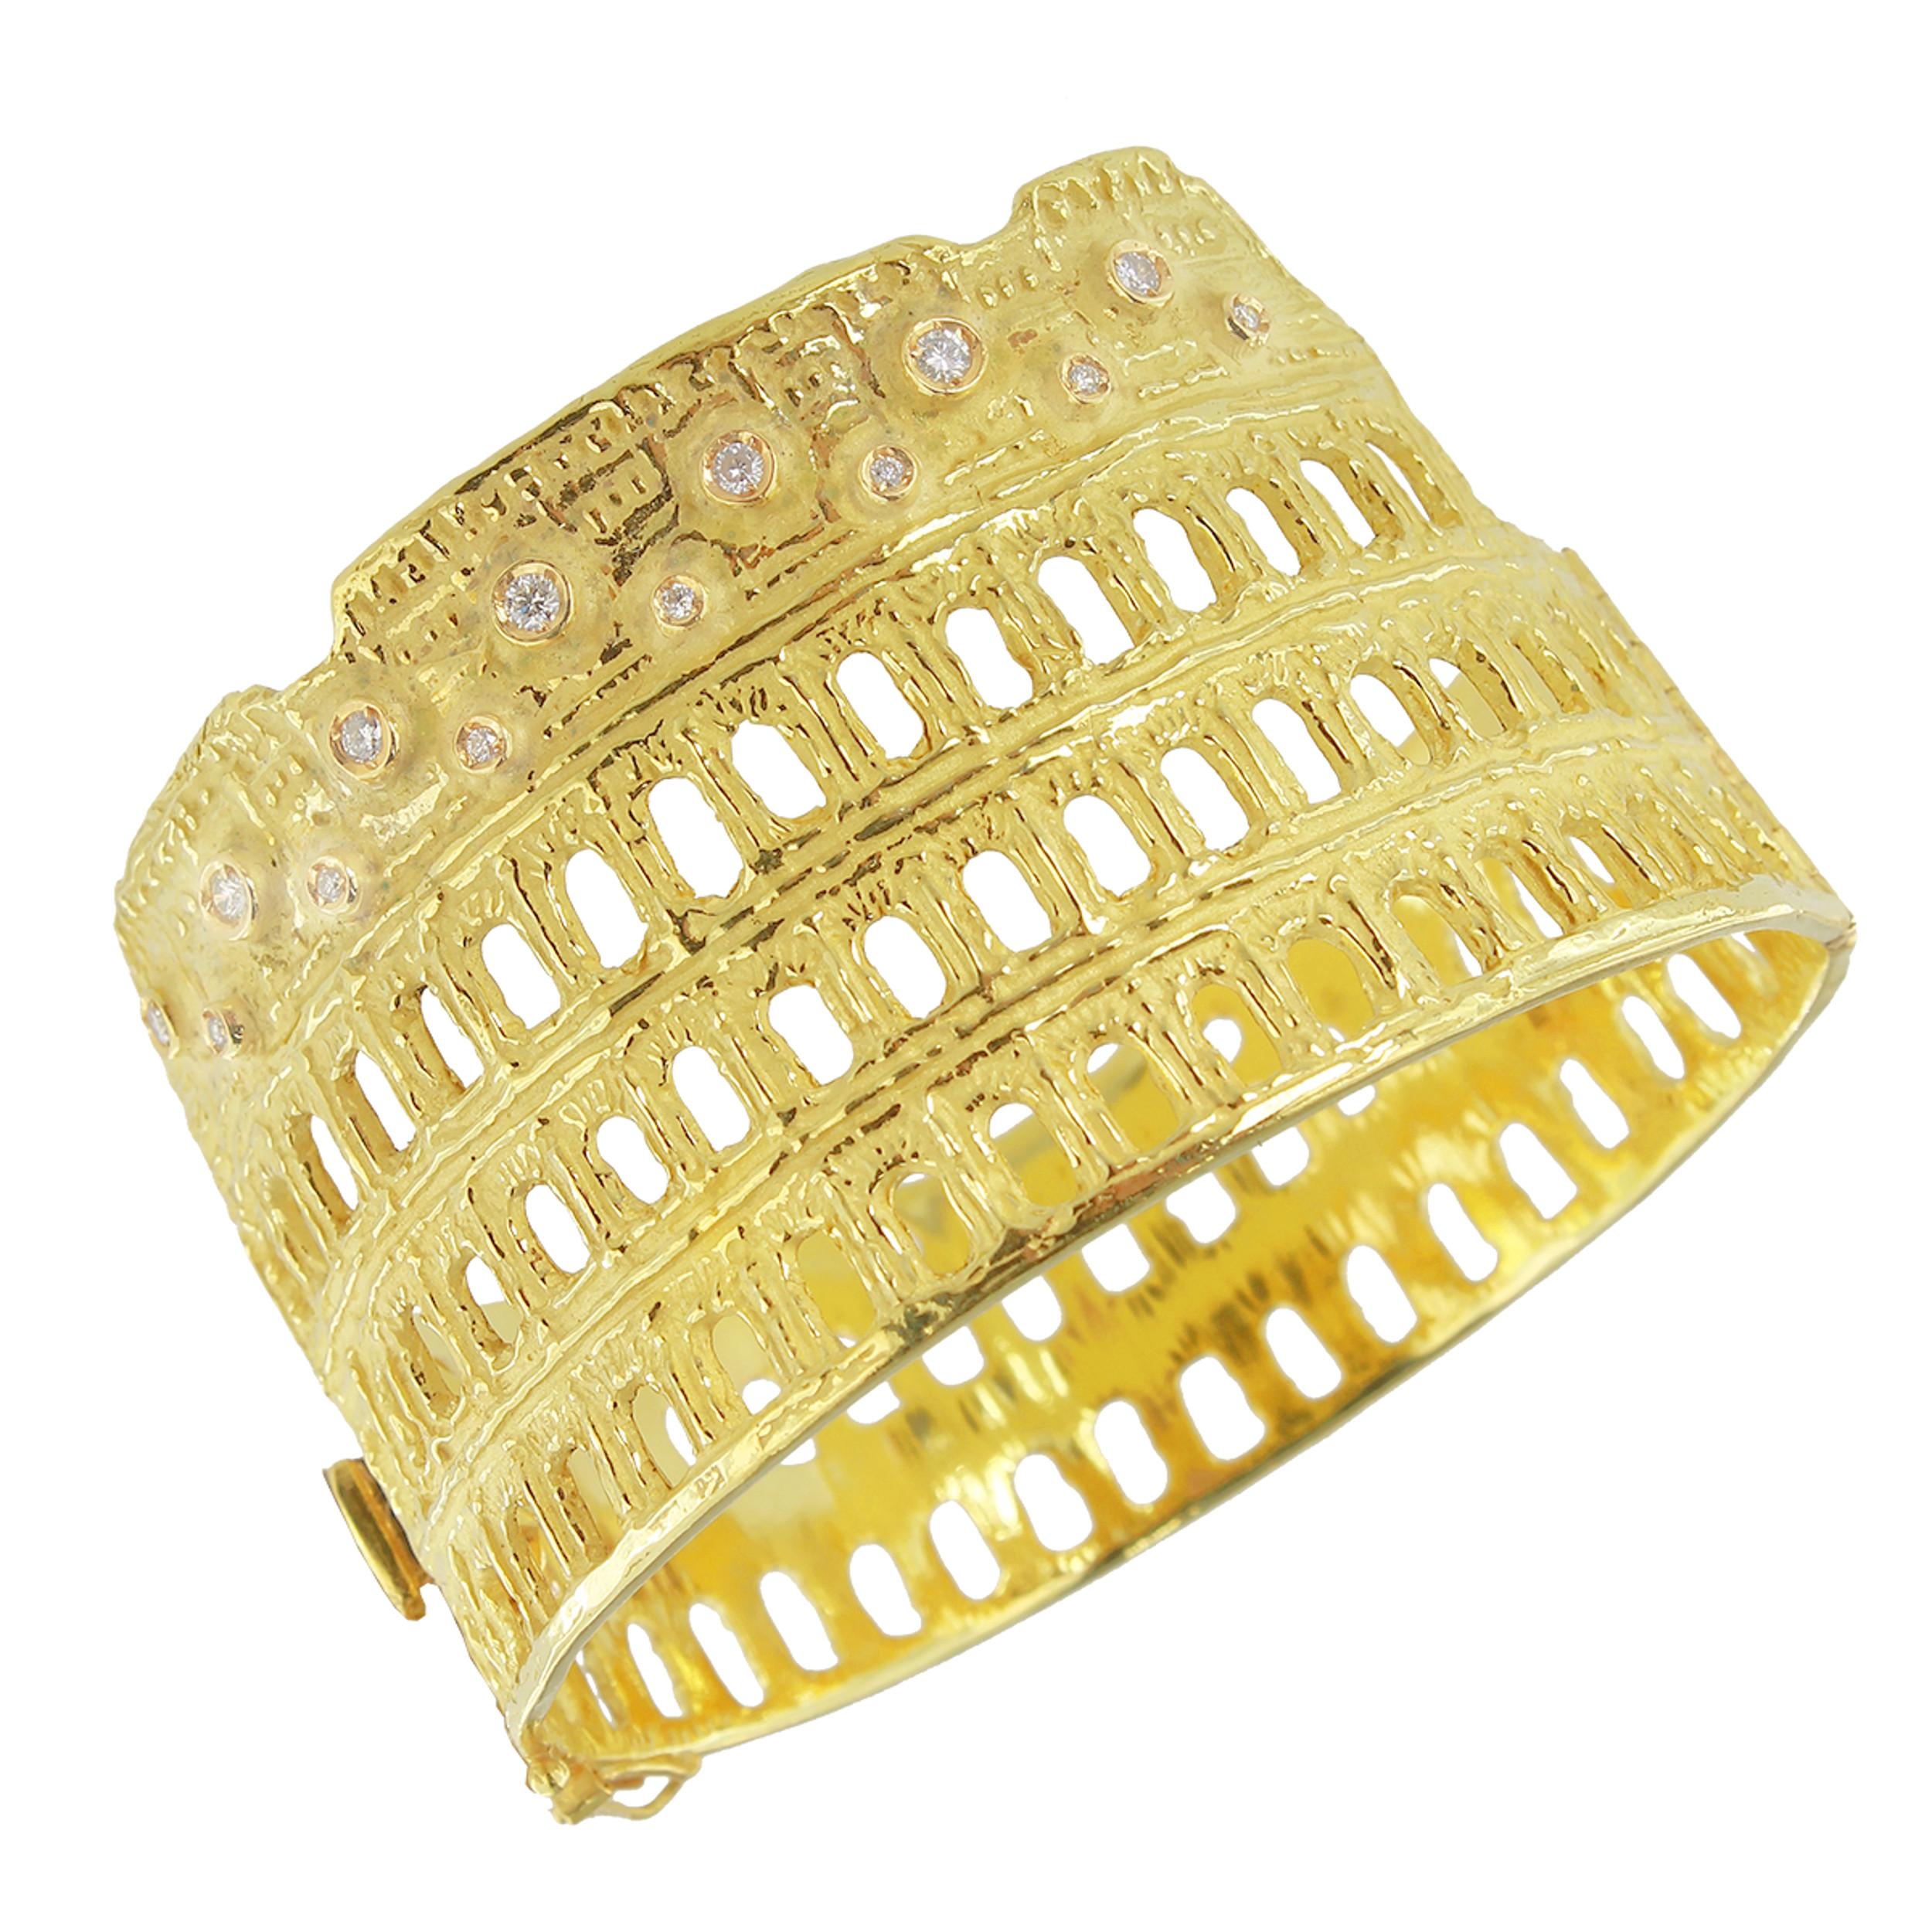 Sacchi Roman Colosseum Diamonds Gemstone Cuff Bracelet 18 Karat Yellow Gold For Sale